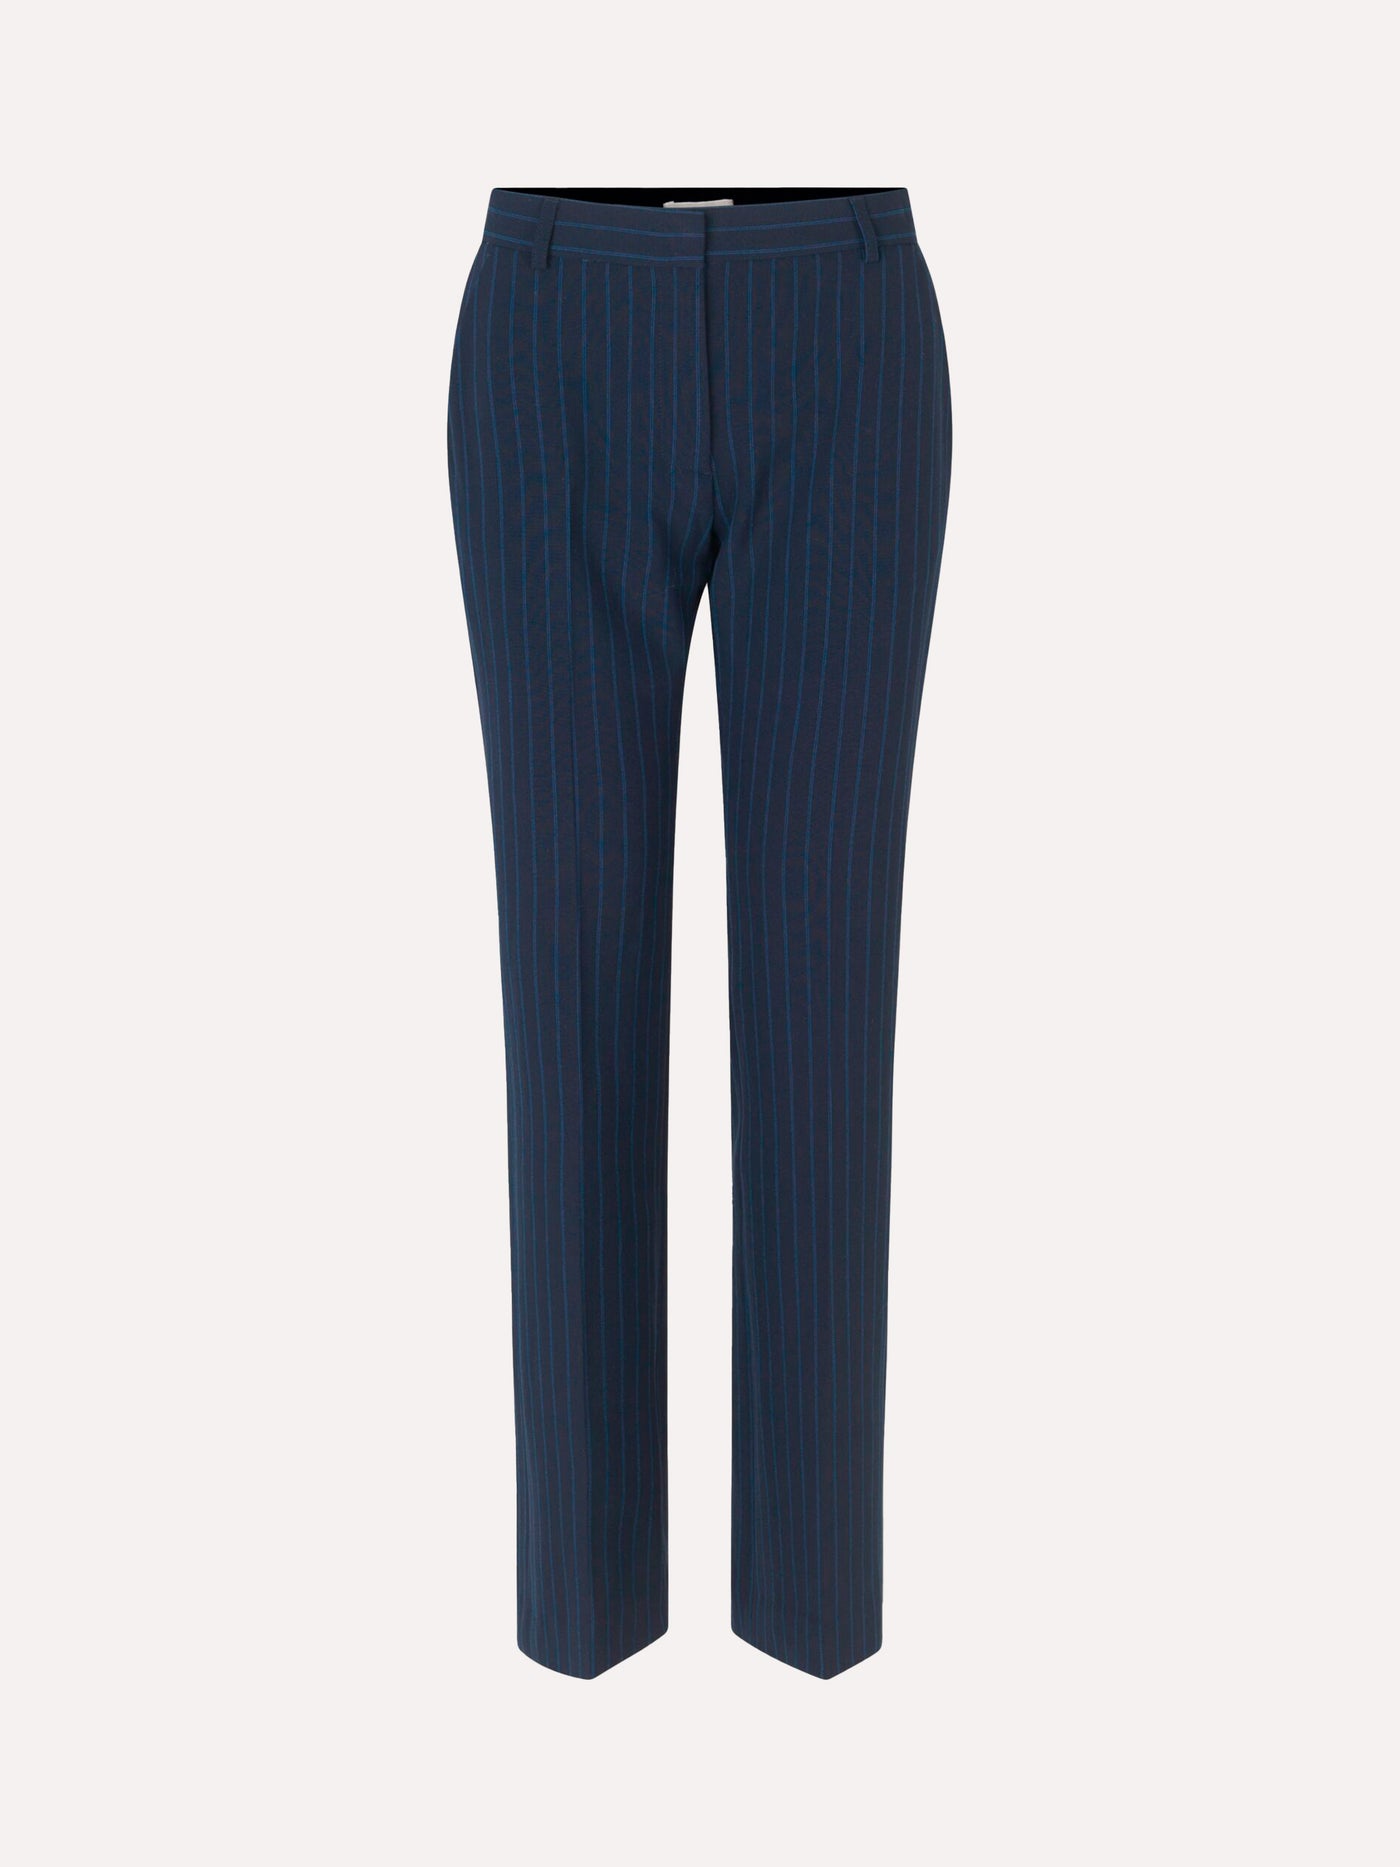 Nena trousers, dark blue